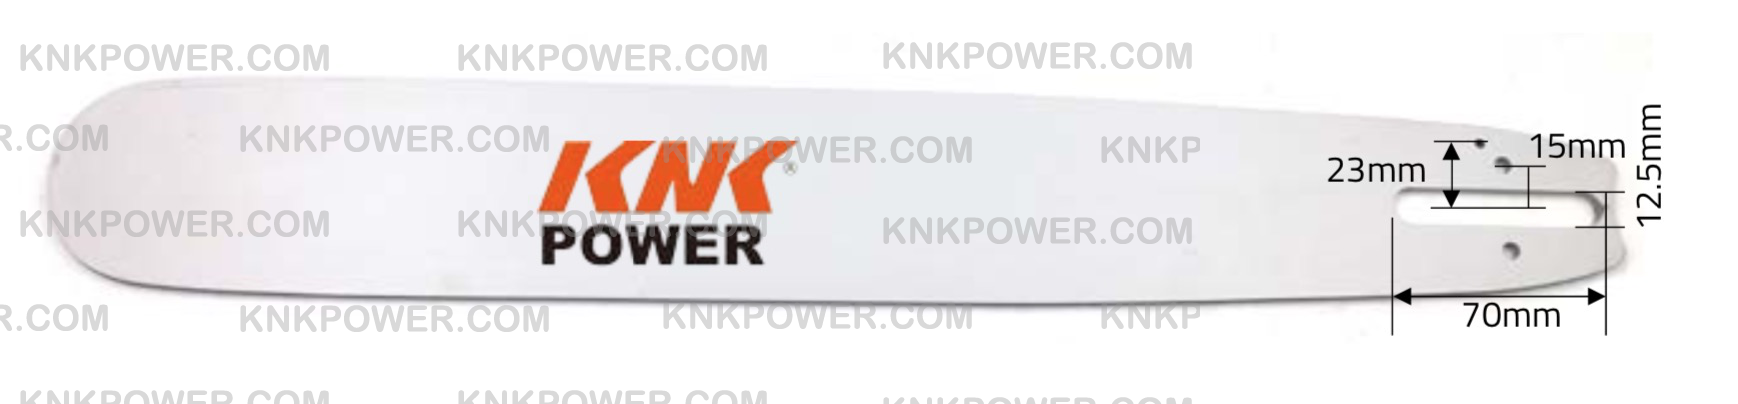 knkpower [6756] STIHL MS361 MS381 MS661